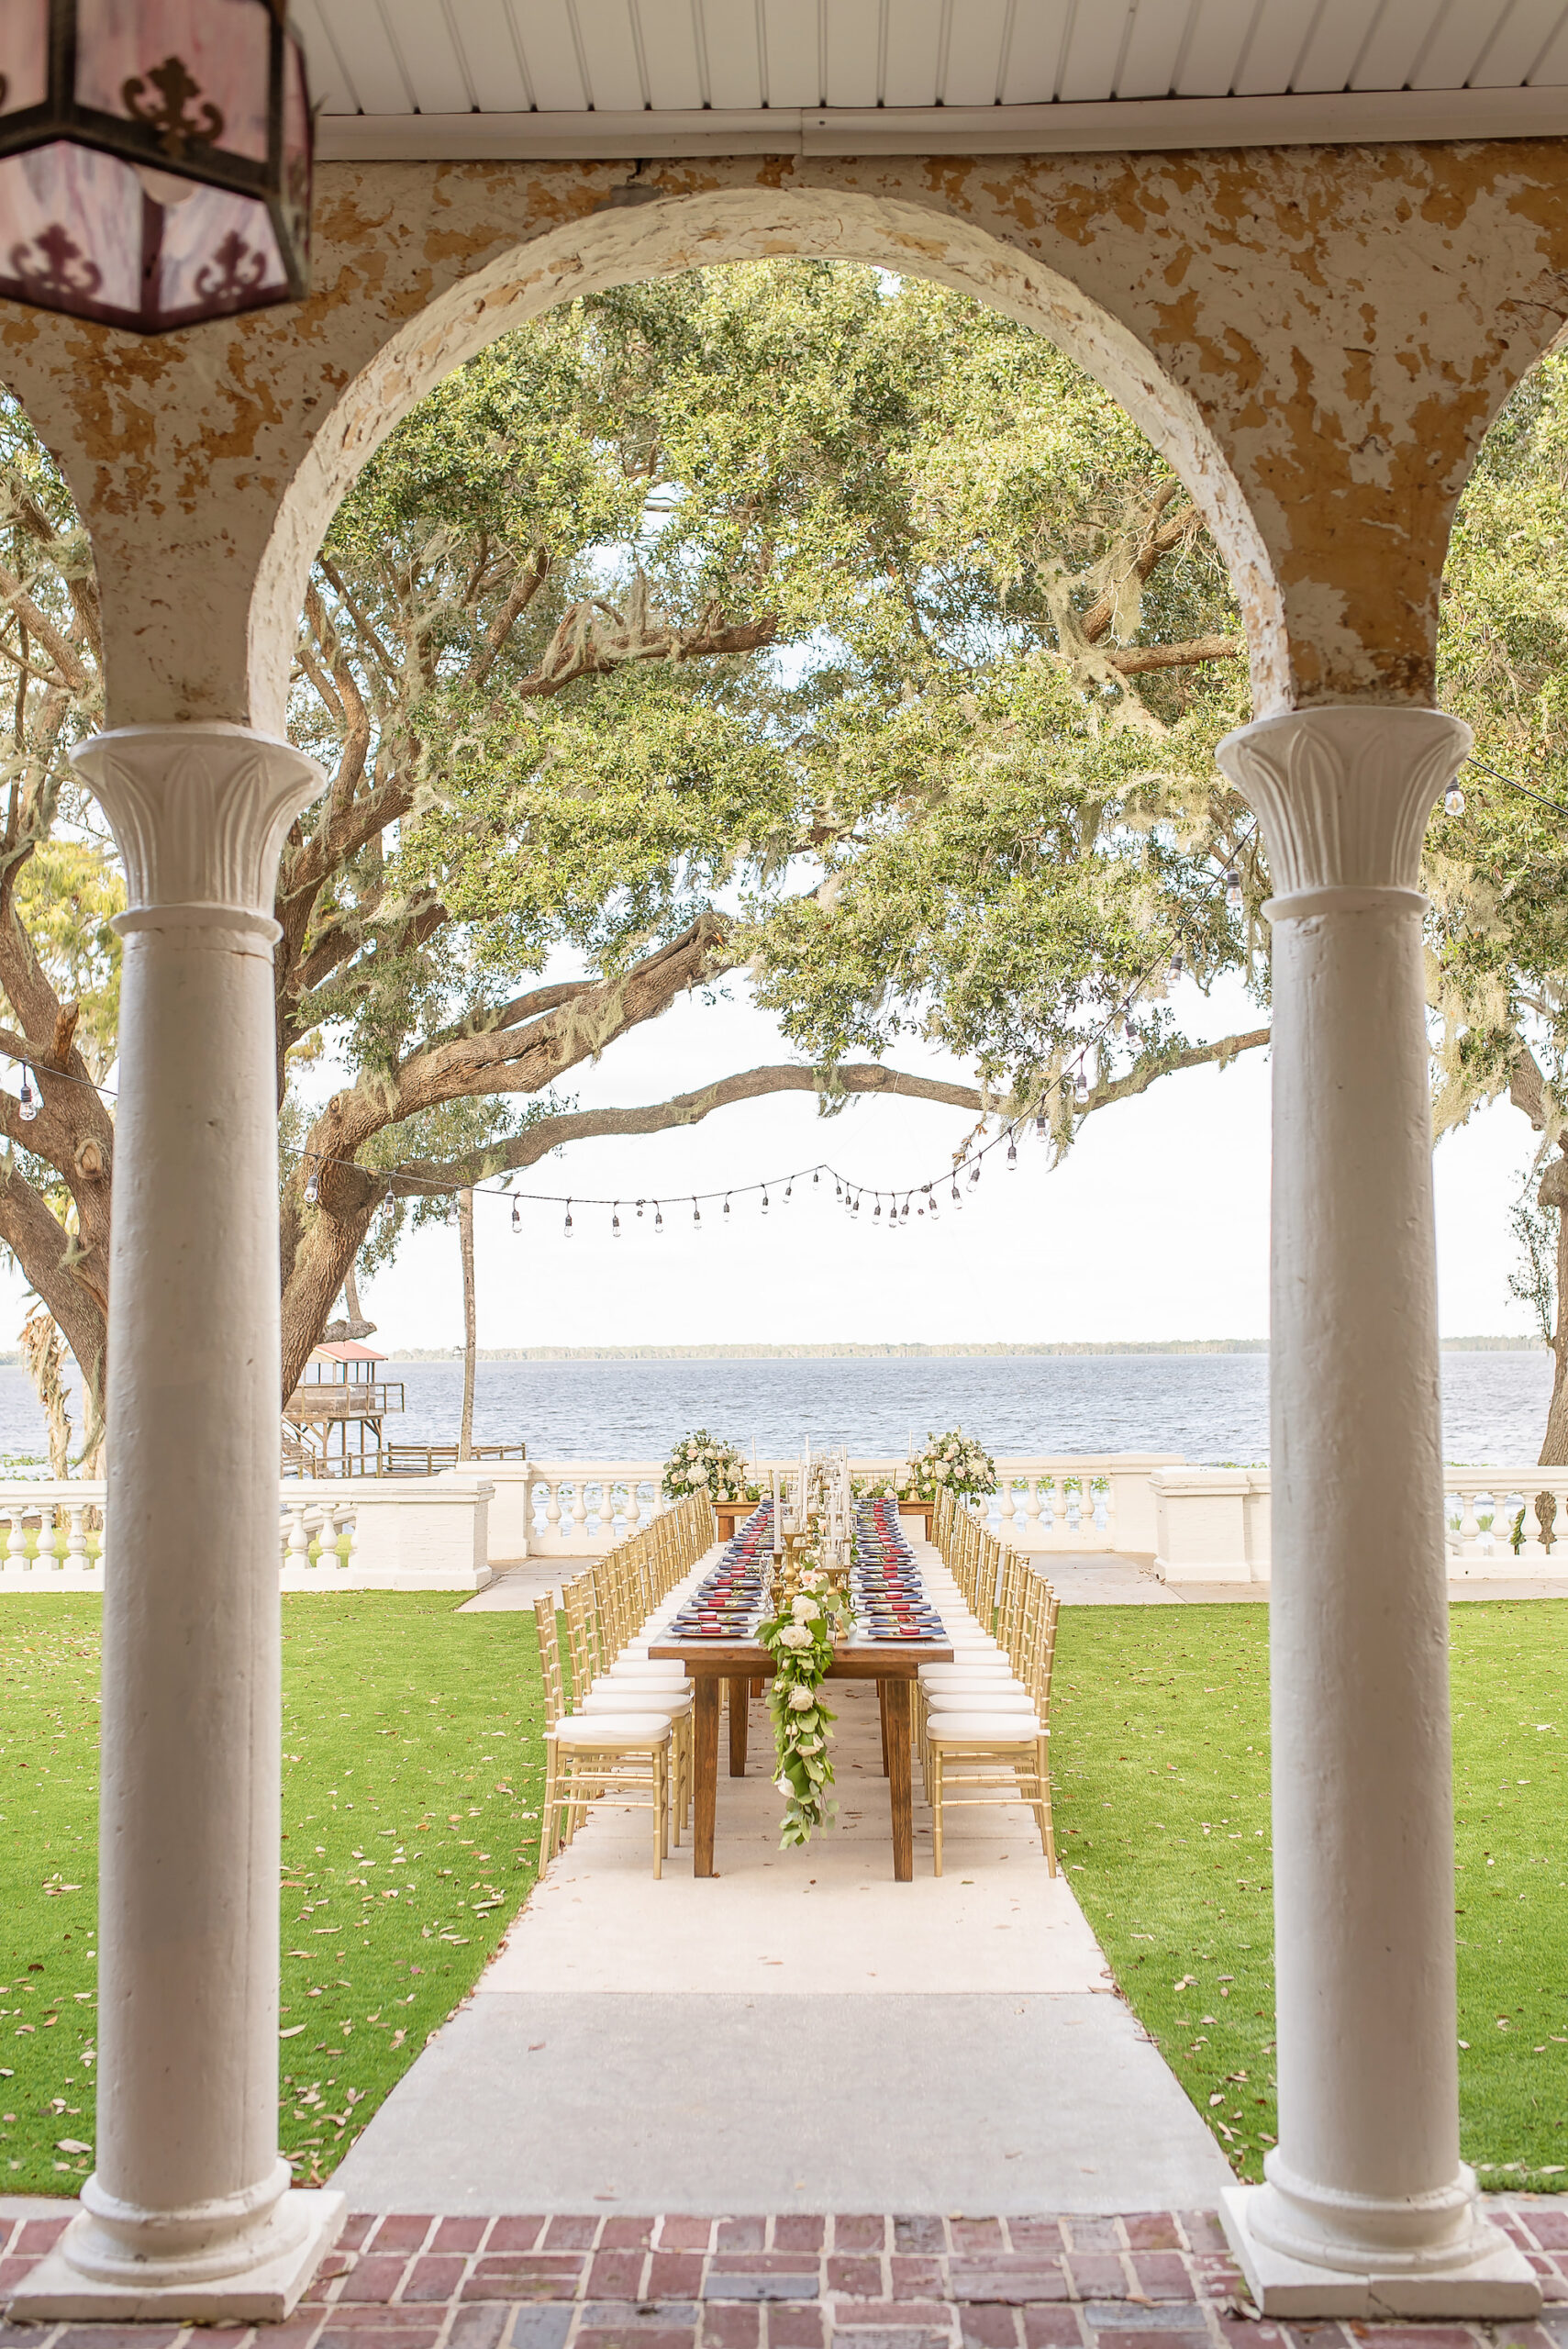 Intimate Waterfront Wedding Reception Inspiration | Elegant Tuscan Italian Inspired Central Florida Wedding Venue Bella Cosa